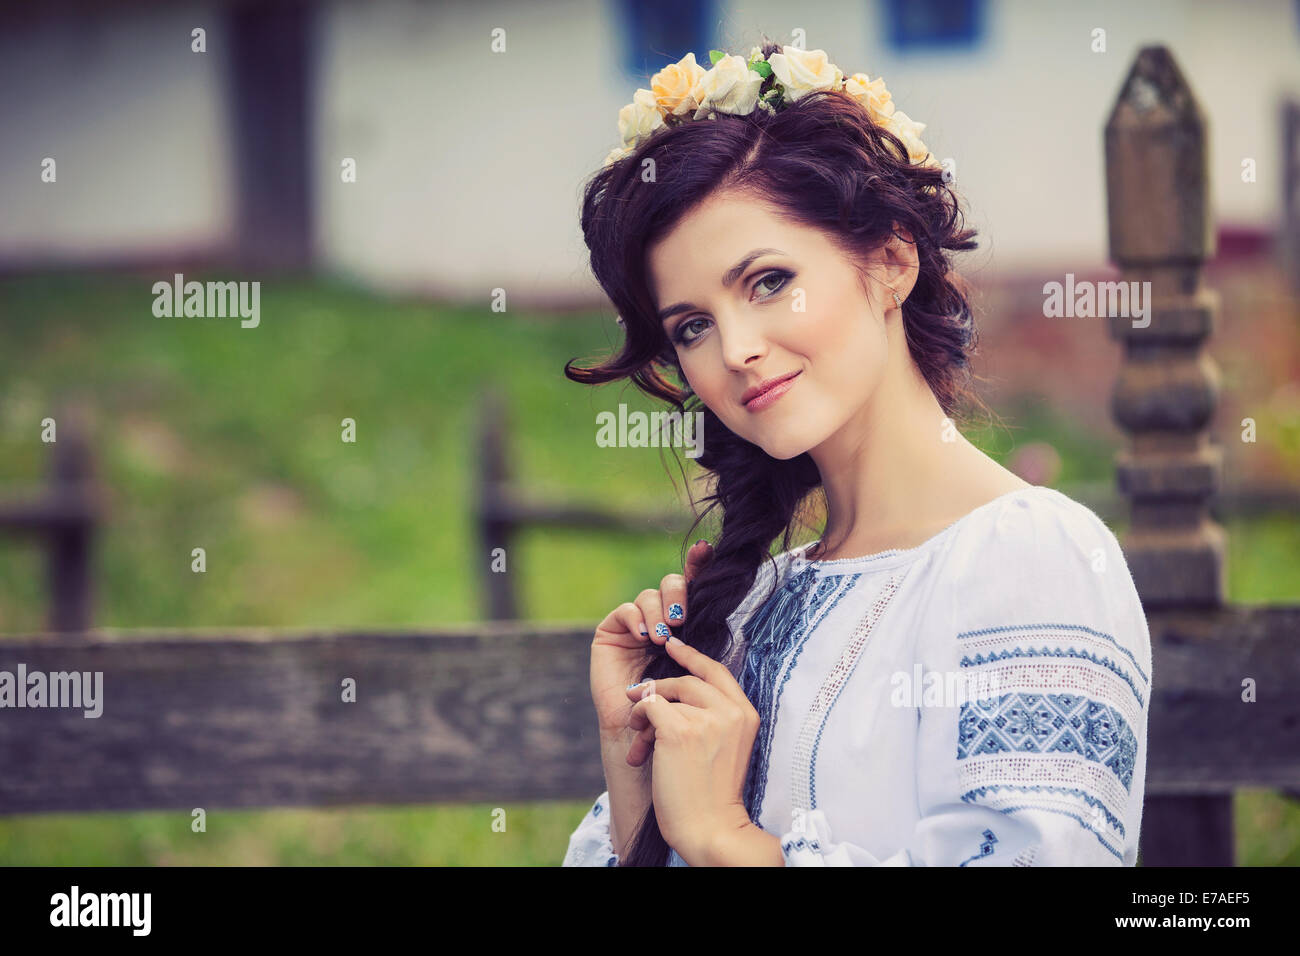 https://c8.alamy.com/comp/E7AEF5/young-beautiful-woman-in-traditional-ukrainian-clothing-E7AEF5.jpg